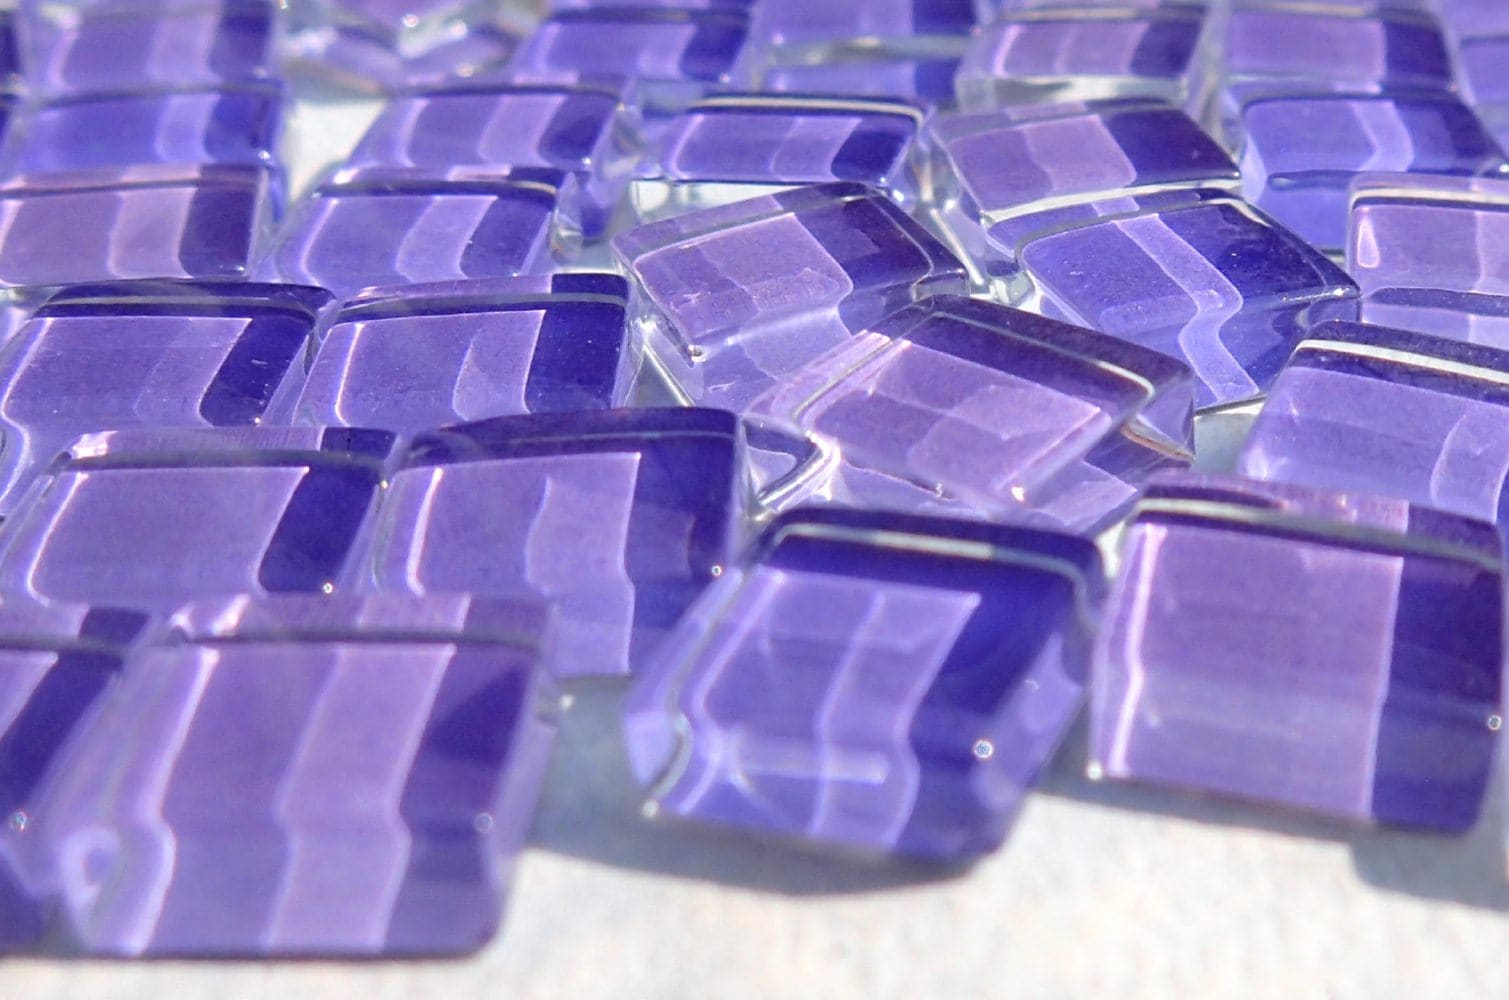 Purple Glass Tiles - 1 cm - 100g - Over 100 Squares